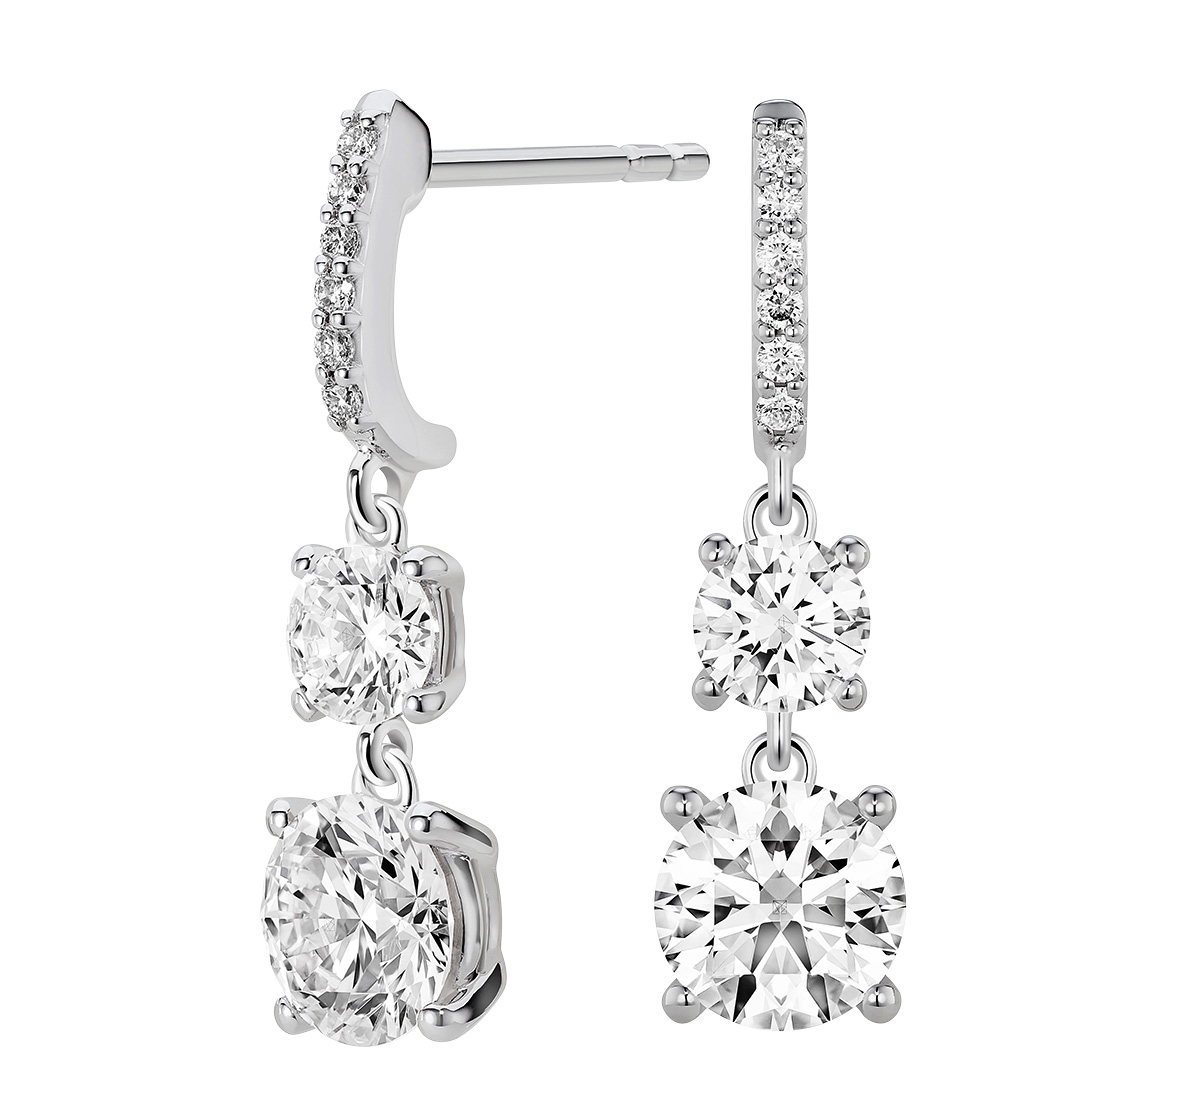 Lightbox double drop 2 carat lab grown diamond earrings